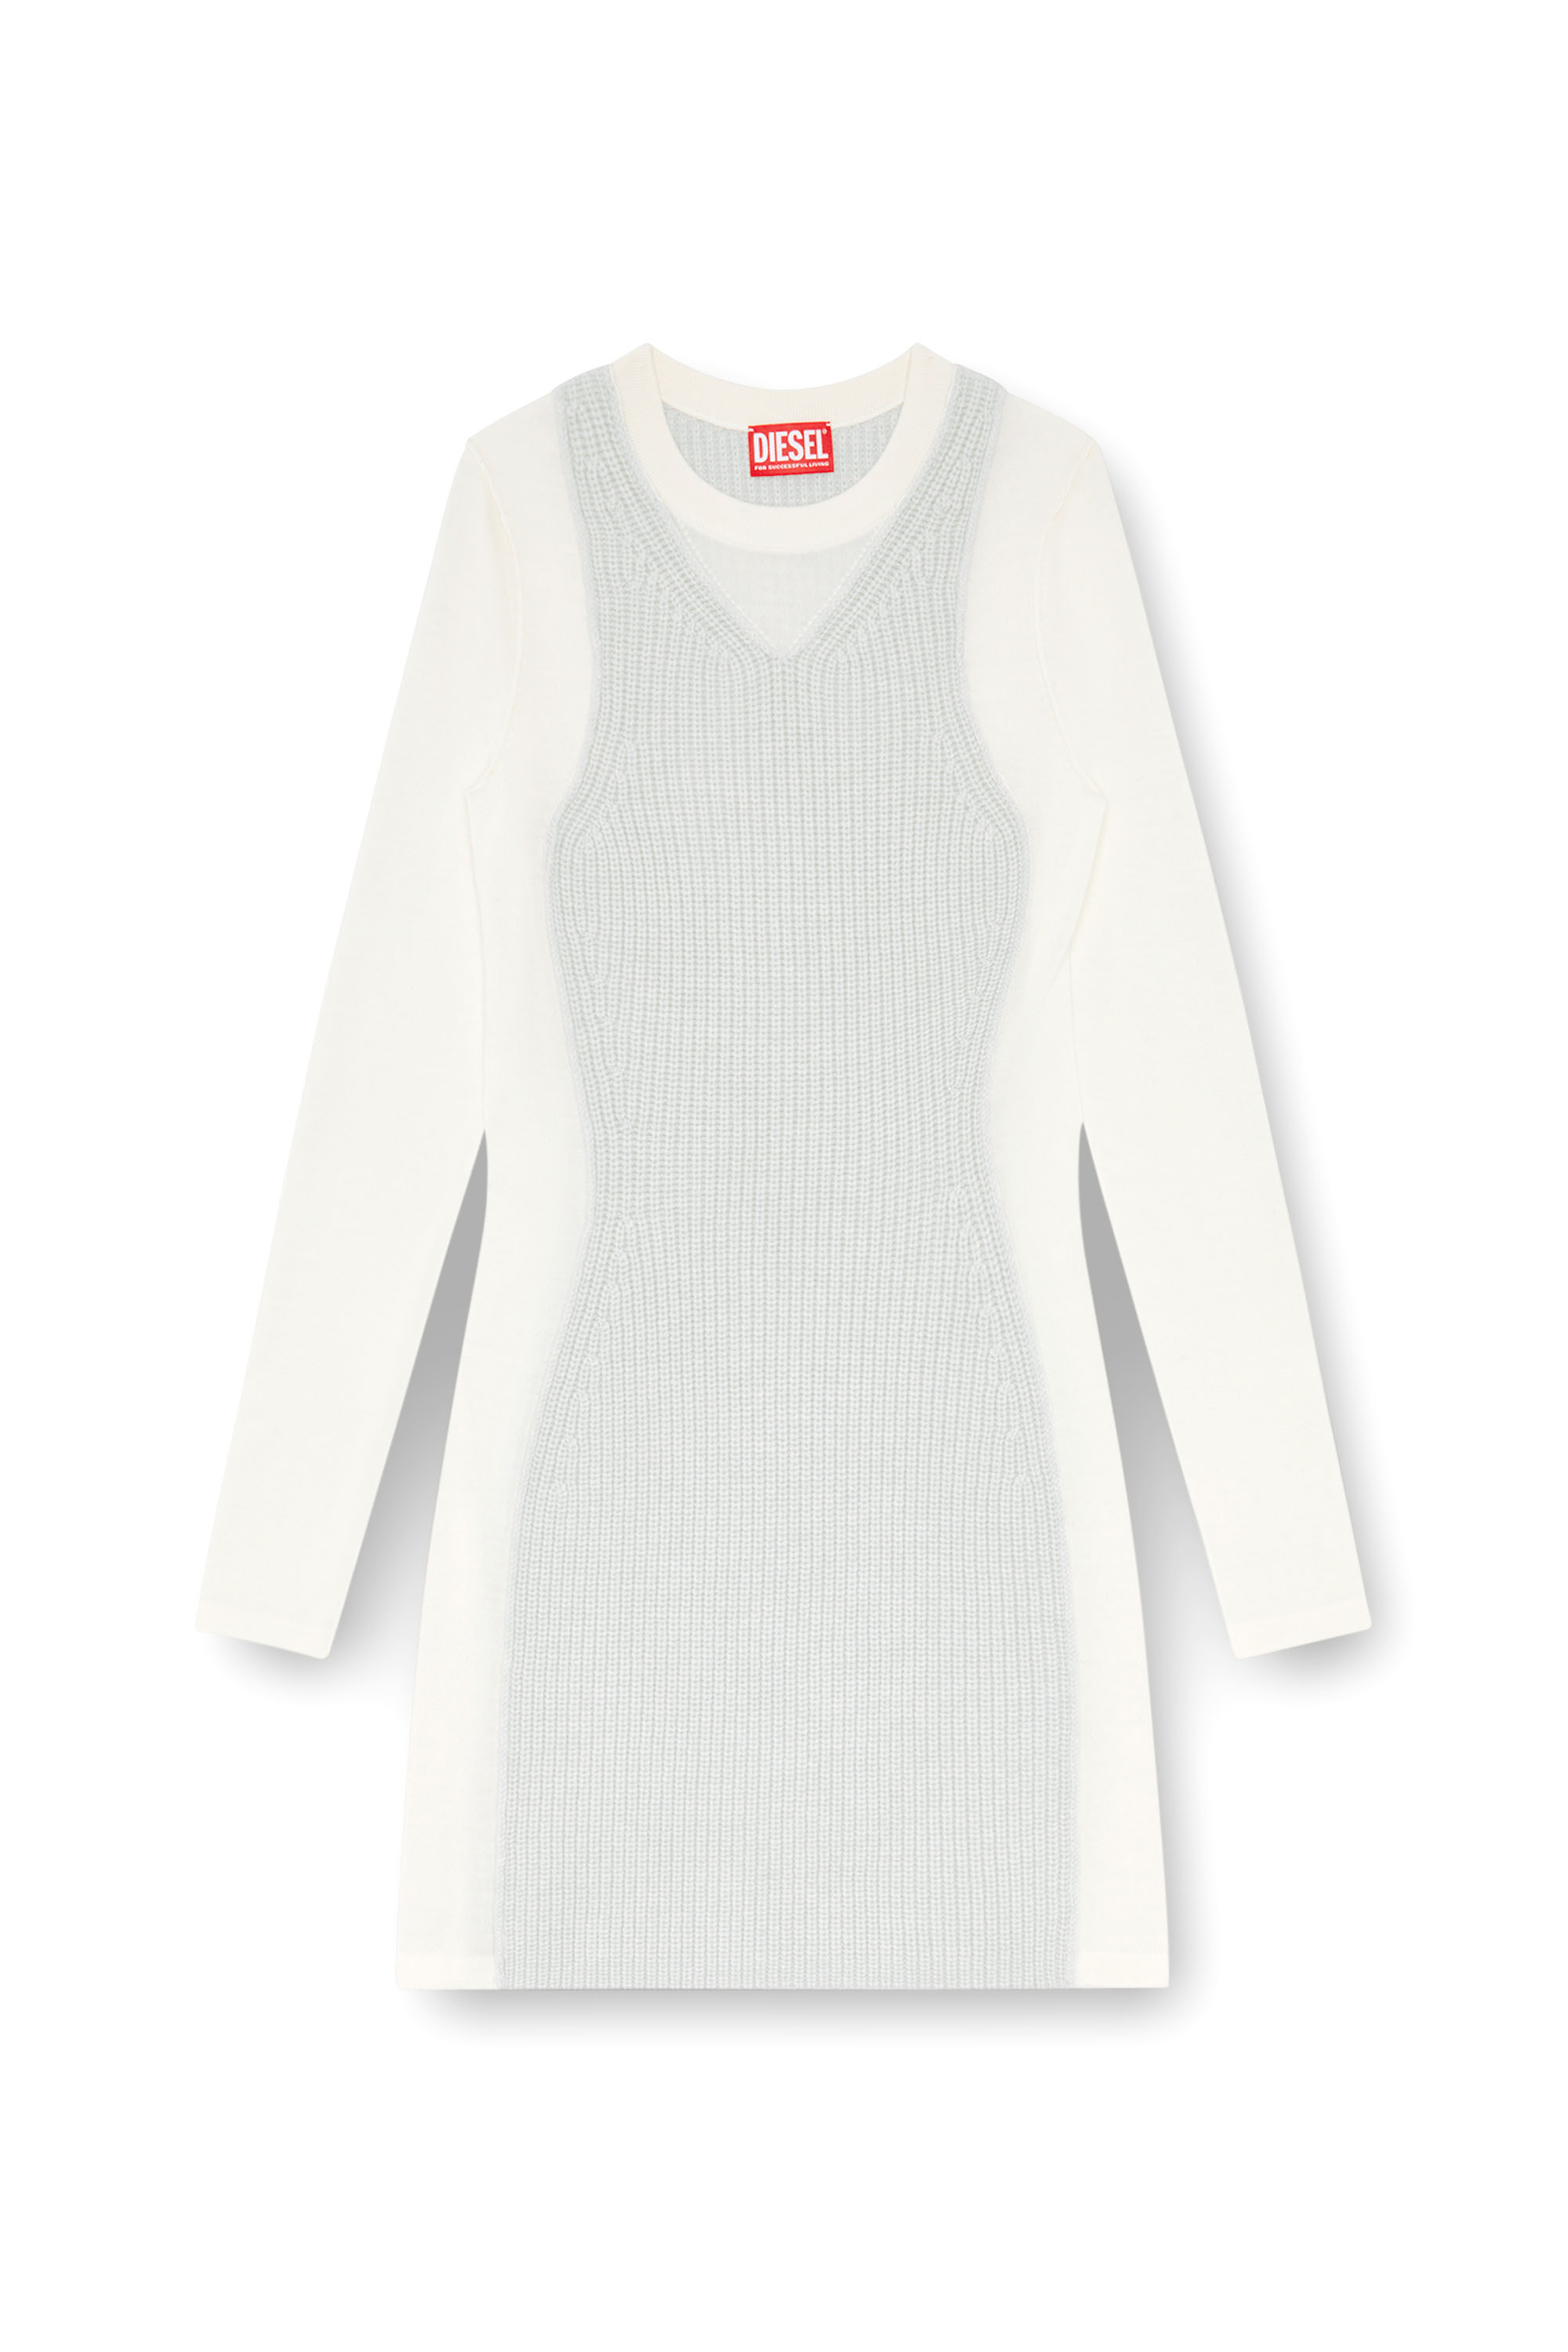 Diesel - M-ARENA, Femme Robe courte en maille à effet superposé in Blanc - Image 1